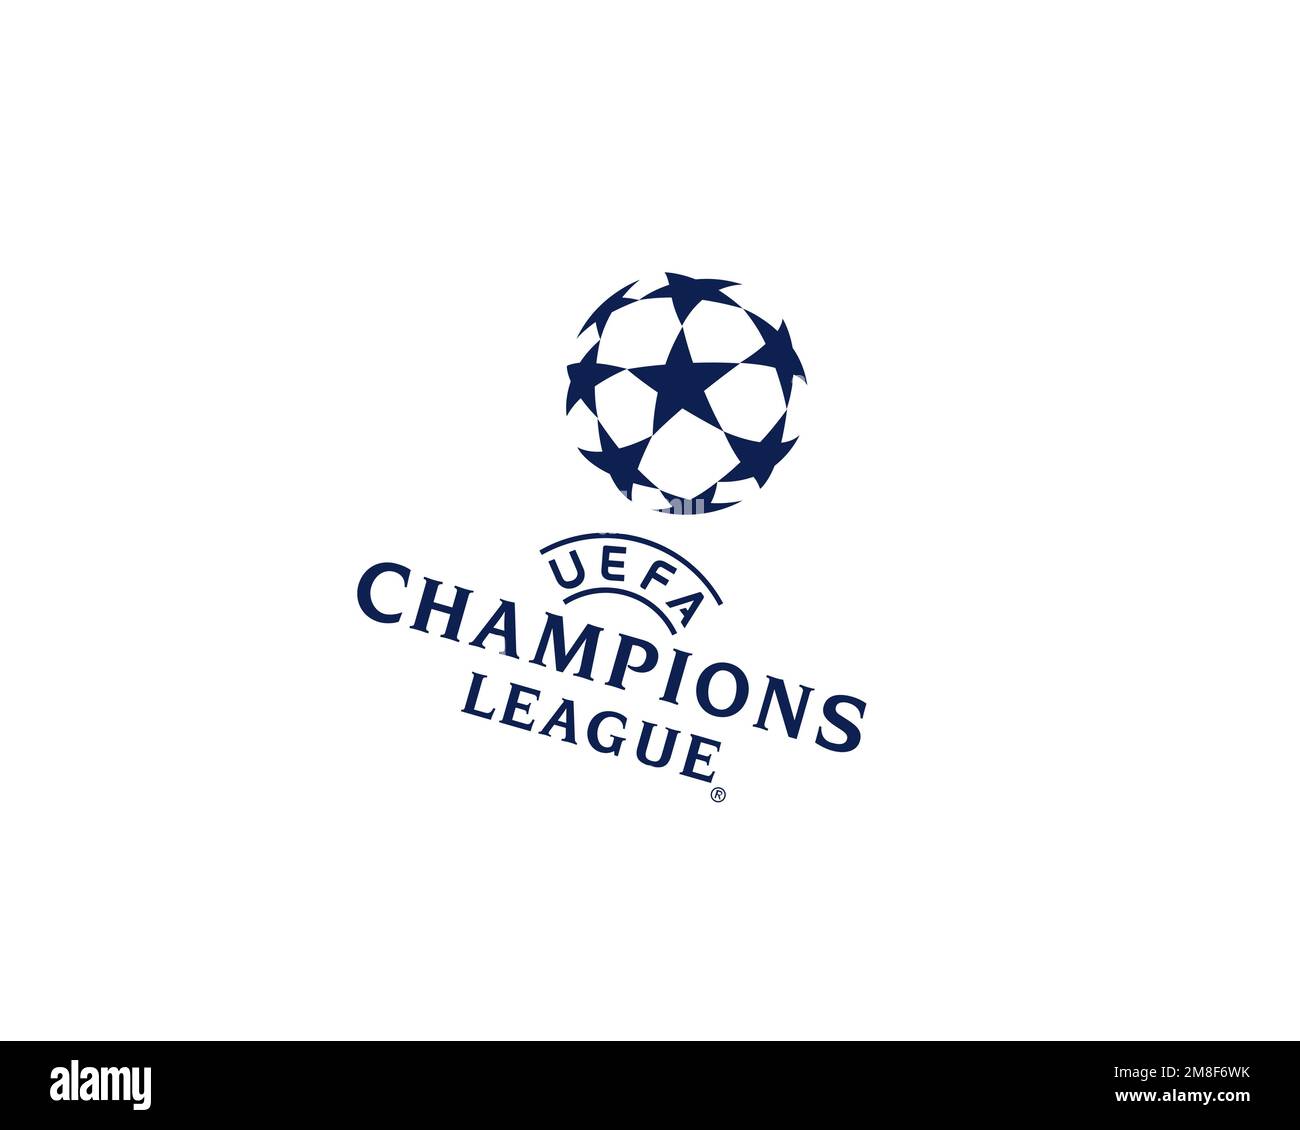 UEFA Champions League, logo ruotato, sfondo bianco B Foto Stock